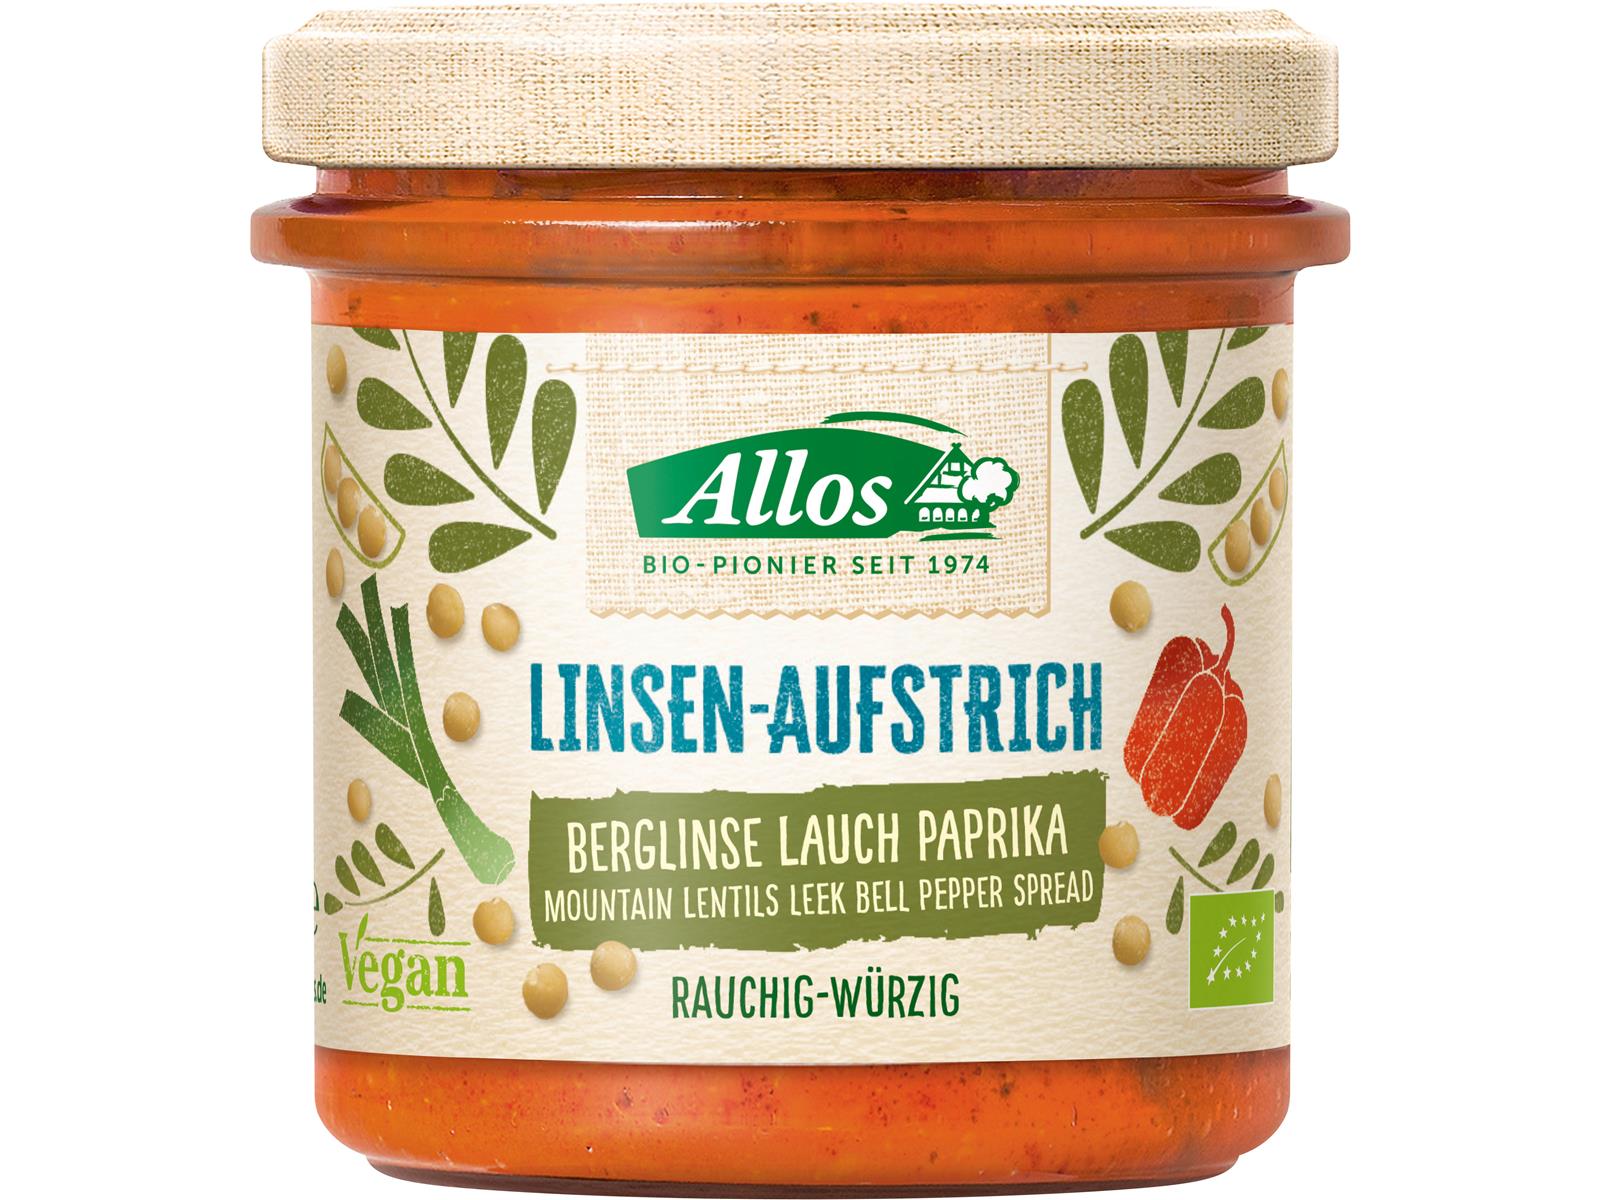 Allos Linsen-Aufstrich Berglinse Lauch Paprika 140 g